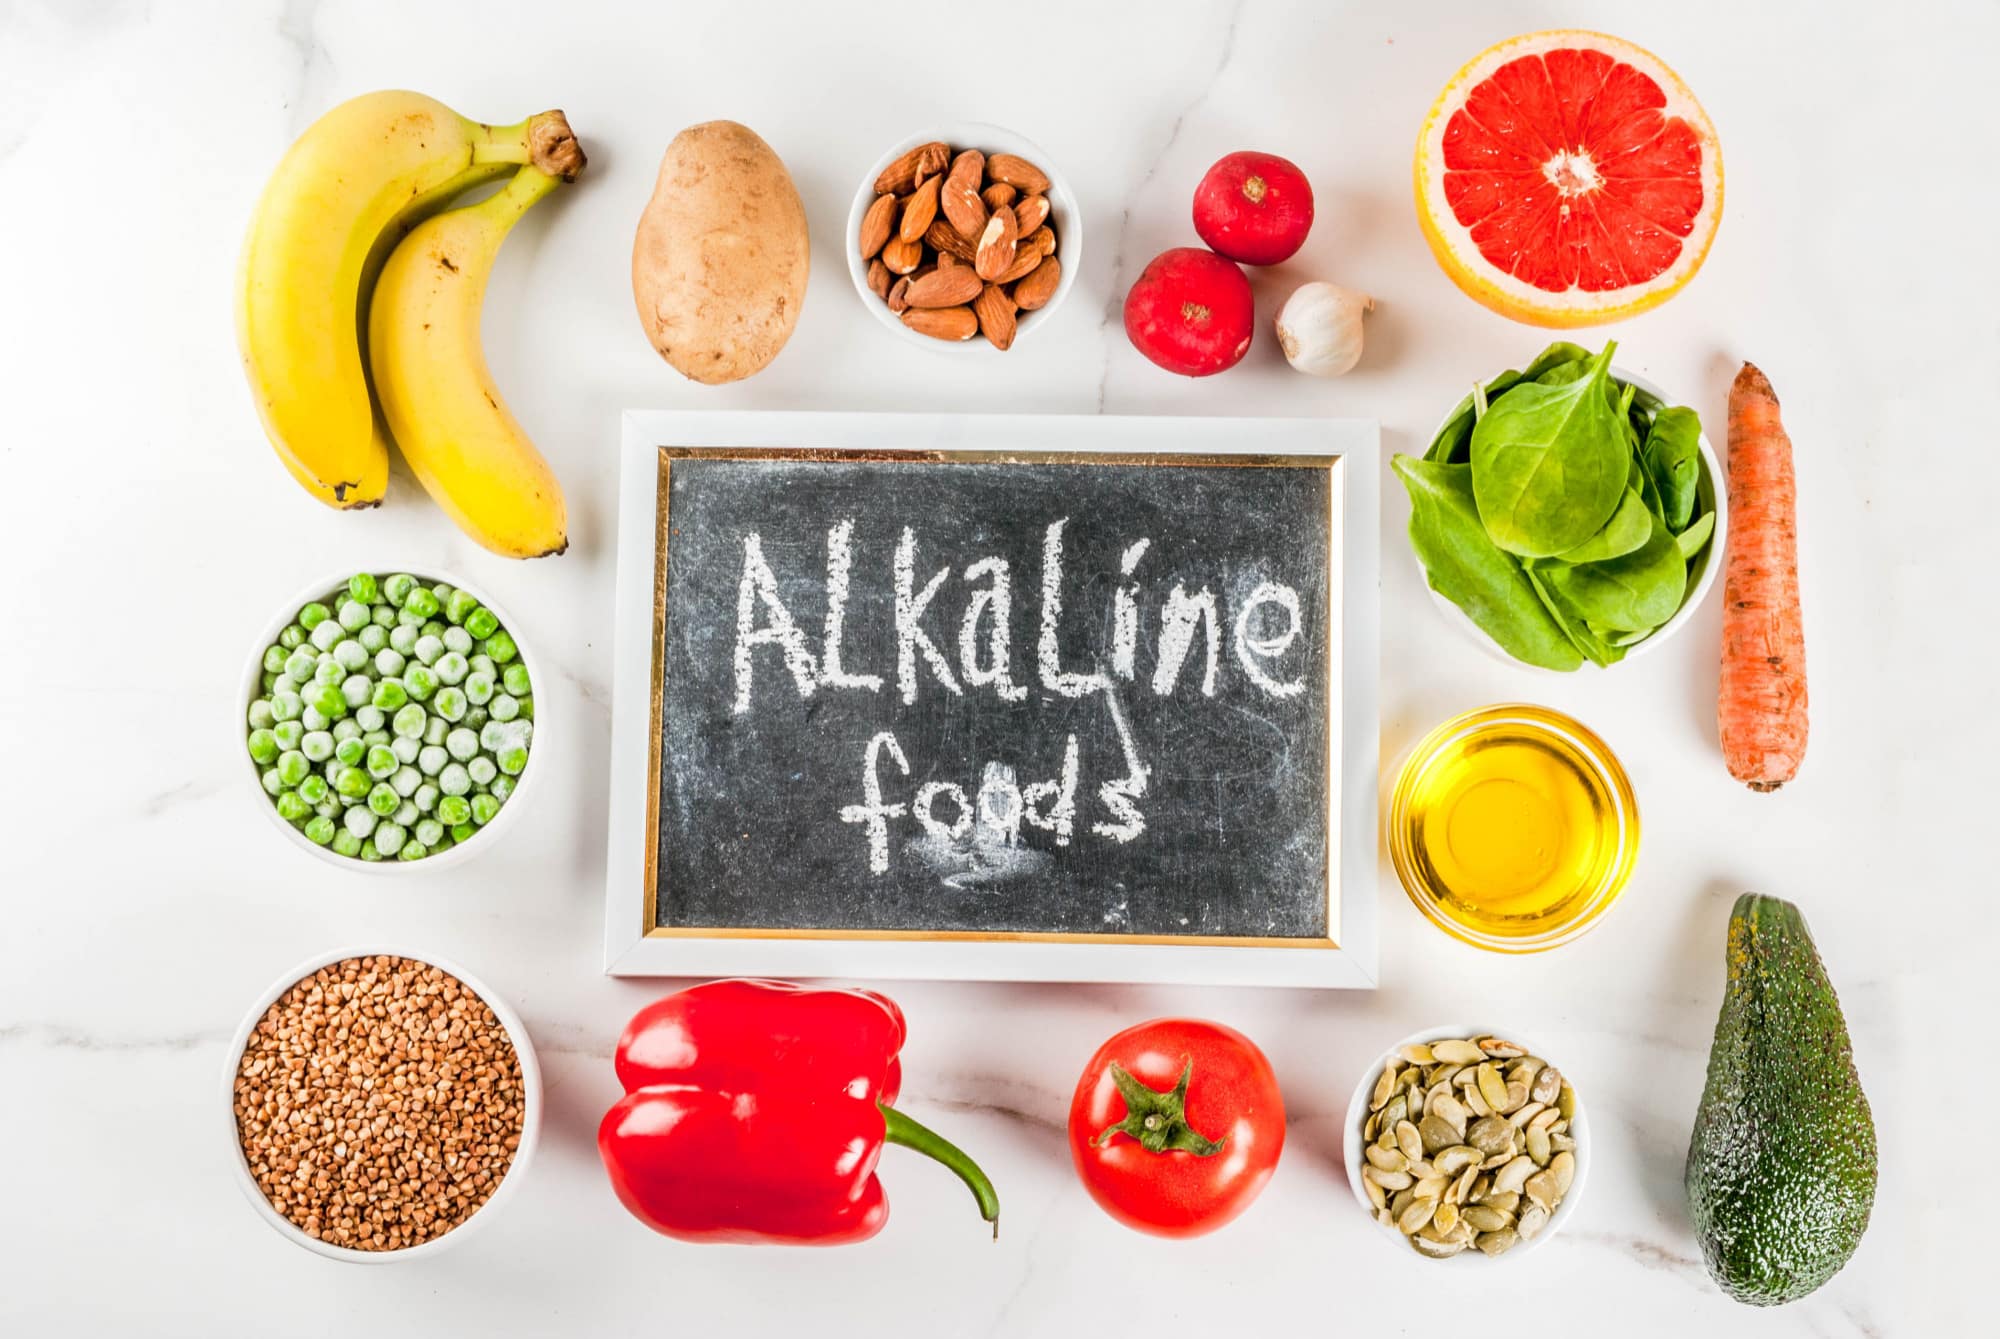 Alkaline diet : What are the benefits ?